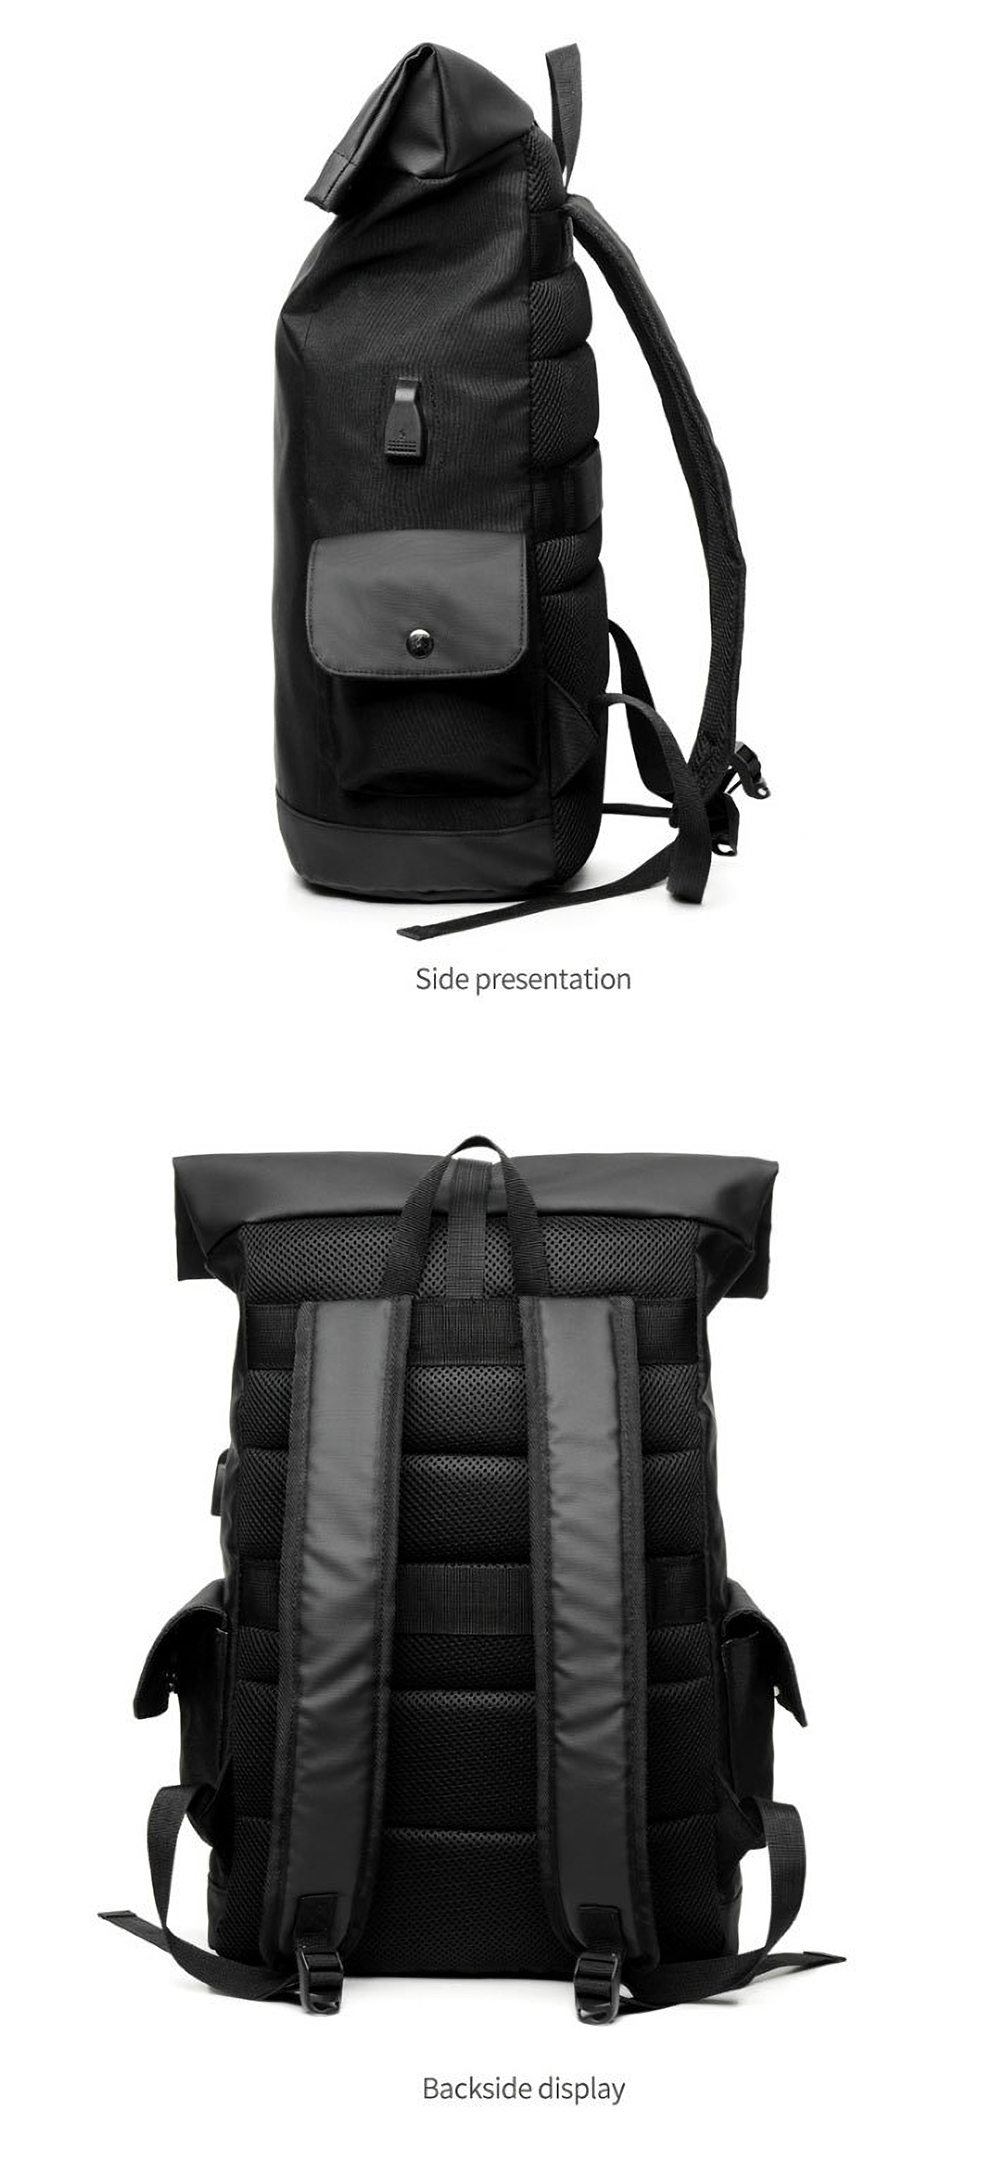 Laptop Bag Multifunction Backpack with USB Charging Port School Bag Travel Bag Nylon Water Resistant Casual Daypack